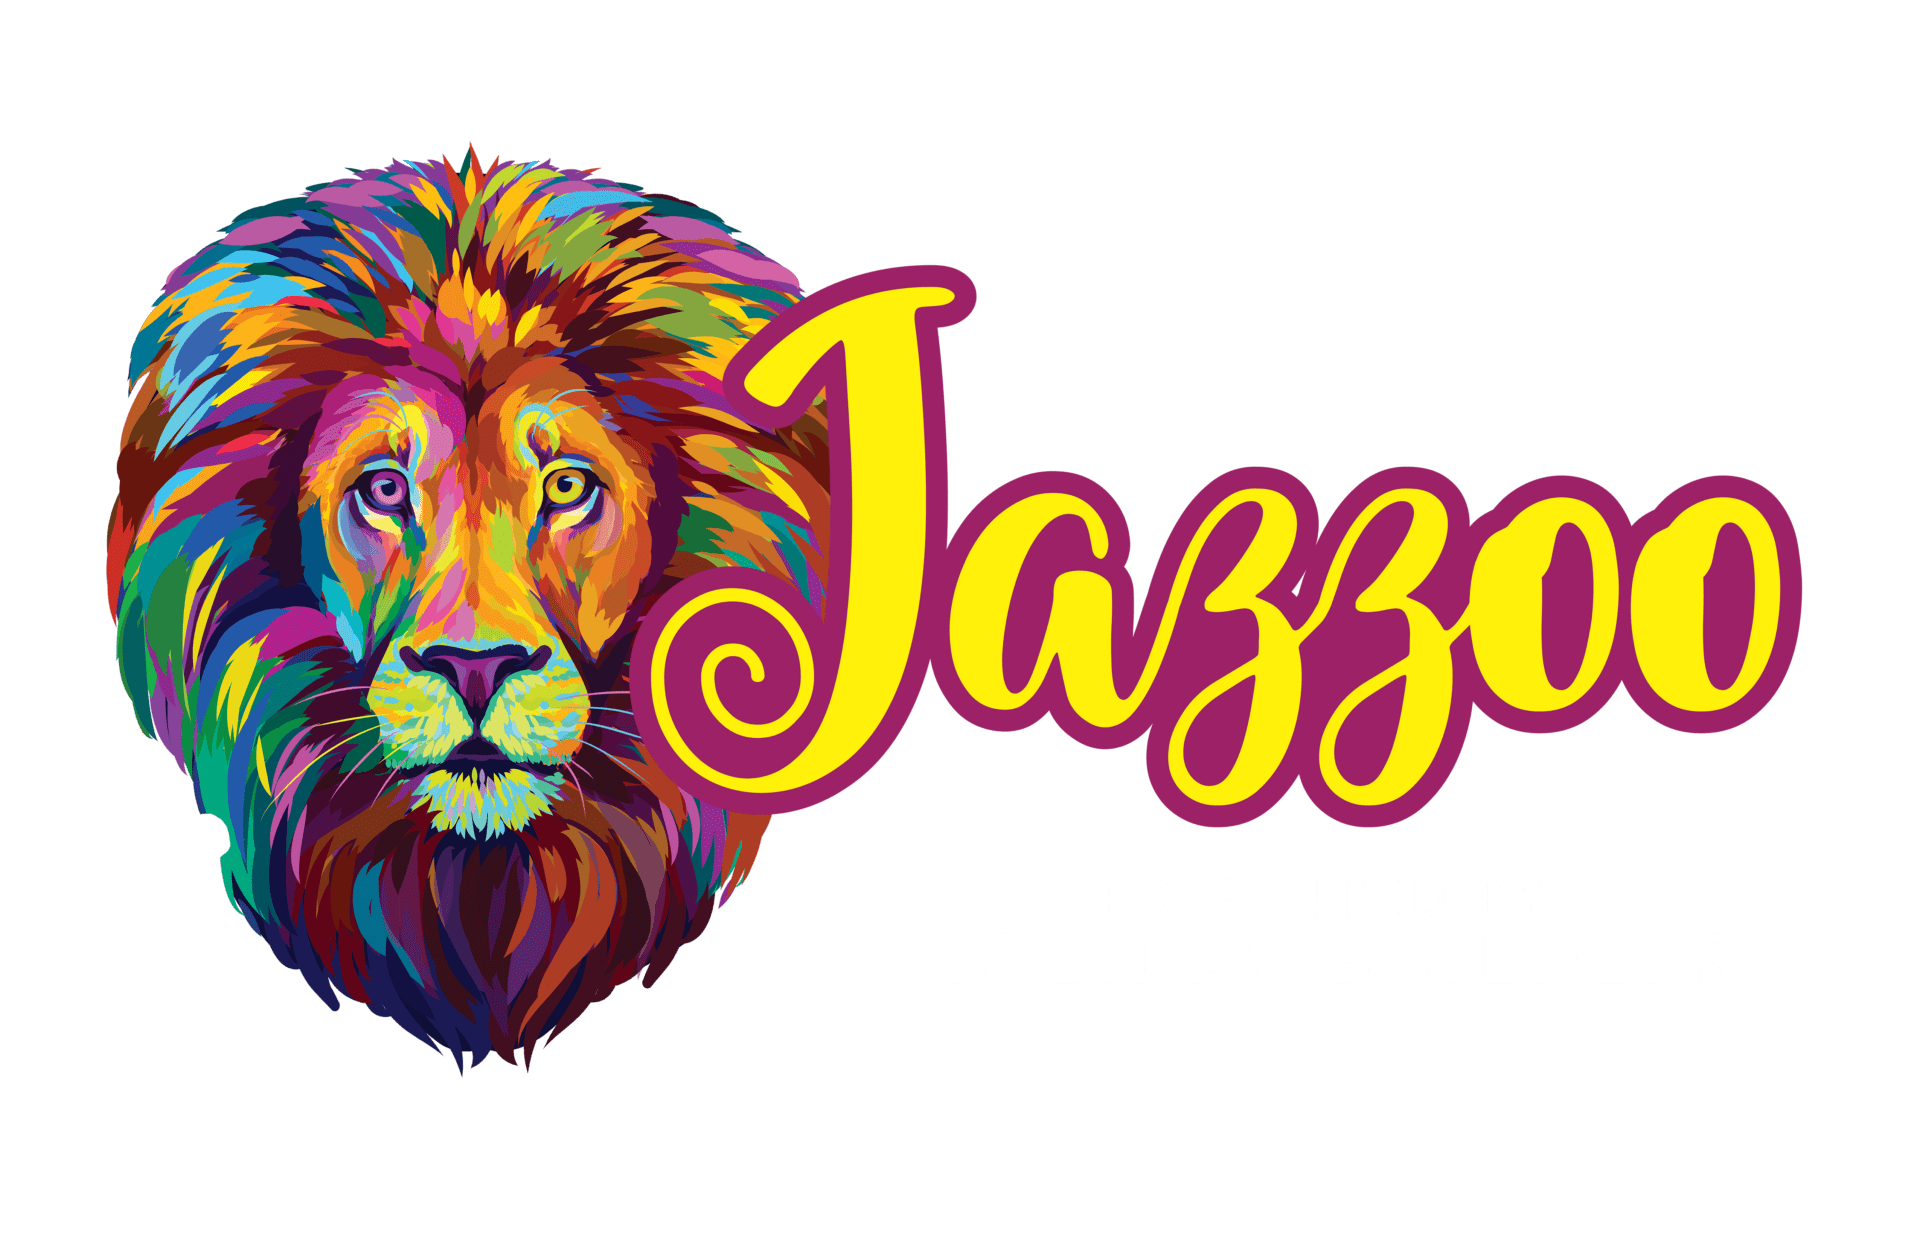 Jazzoo Logo with Lion head illustration